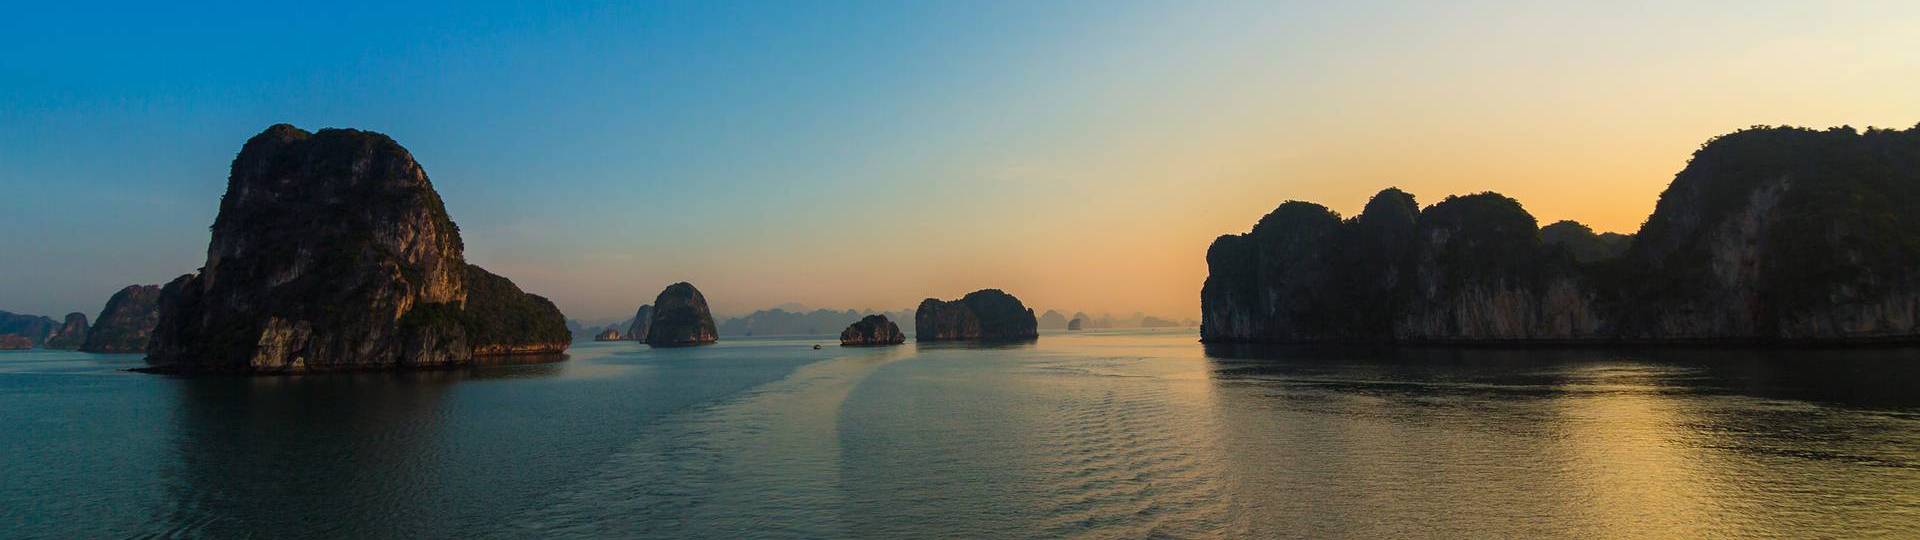 Halong Bay, Bai Tu Long Bay and Lan Ha Bay